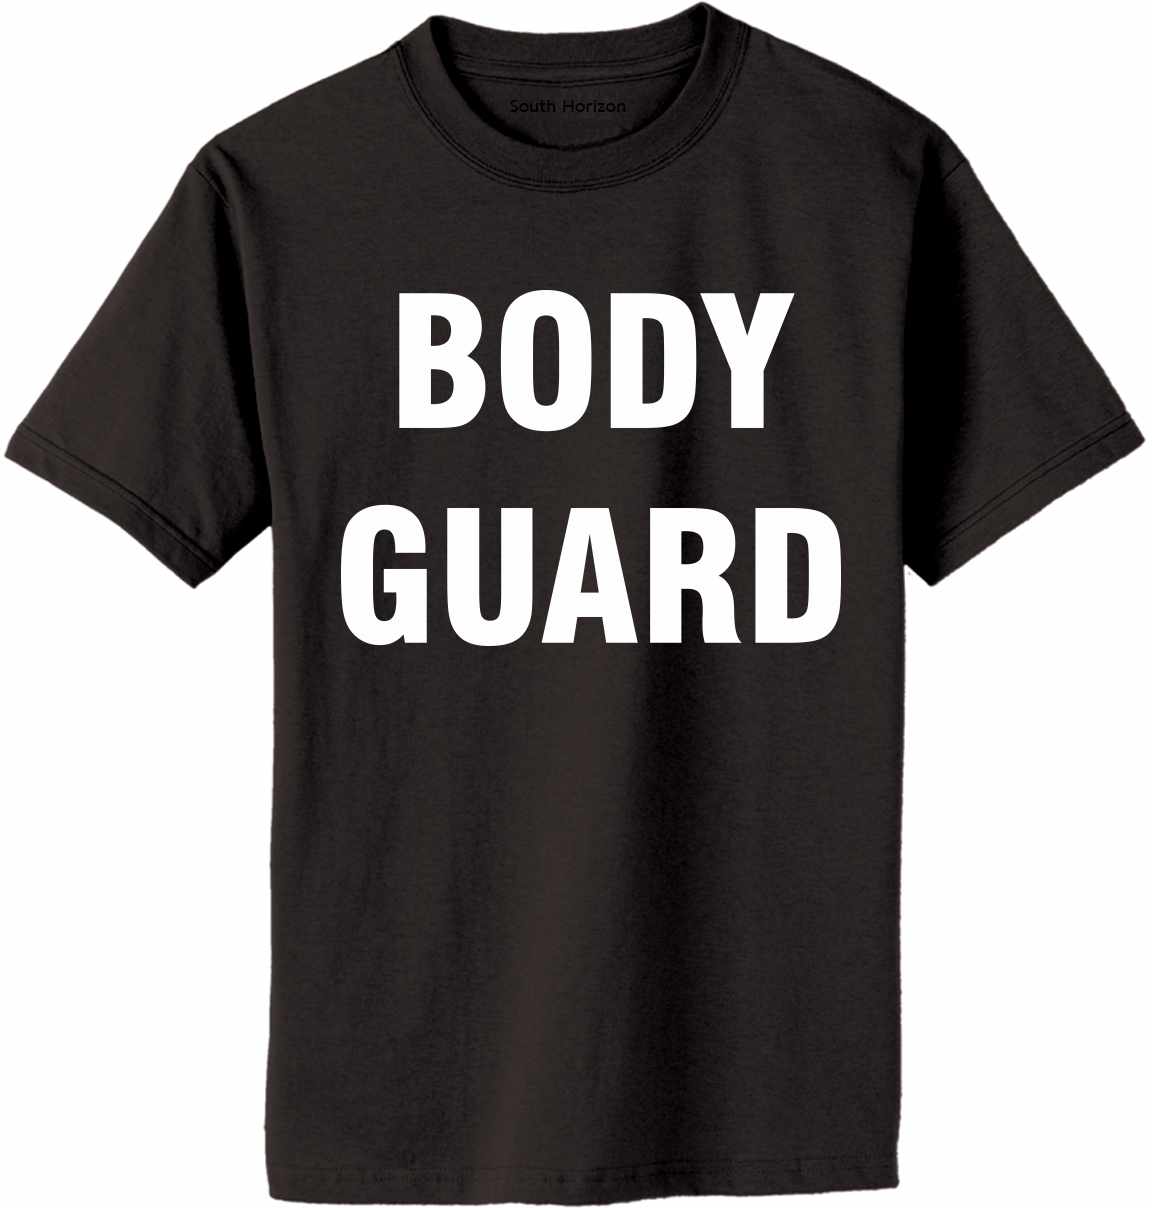 BODY GUARD Adult T-Shirt (#234-1)